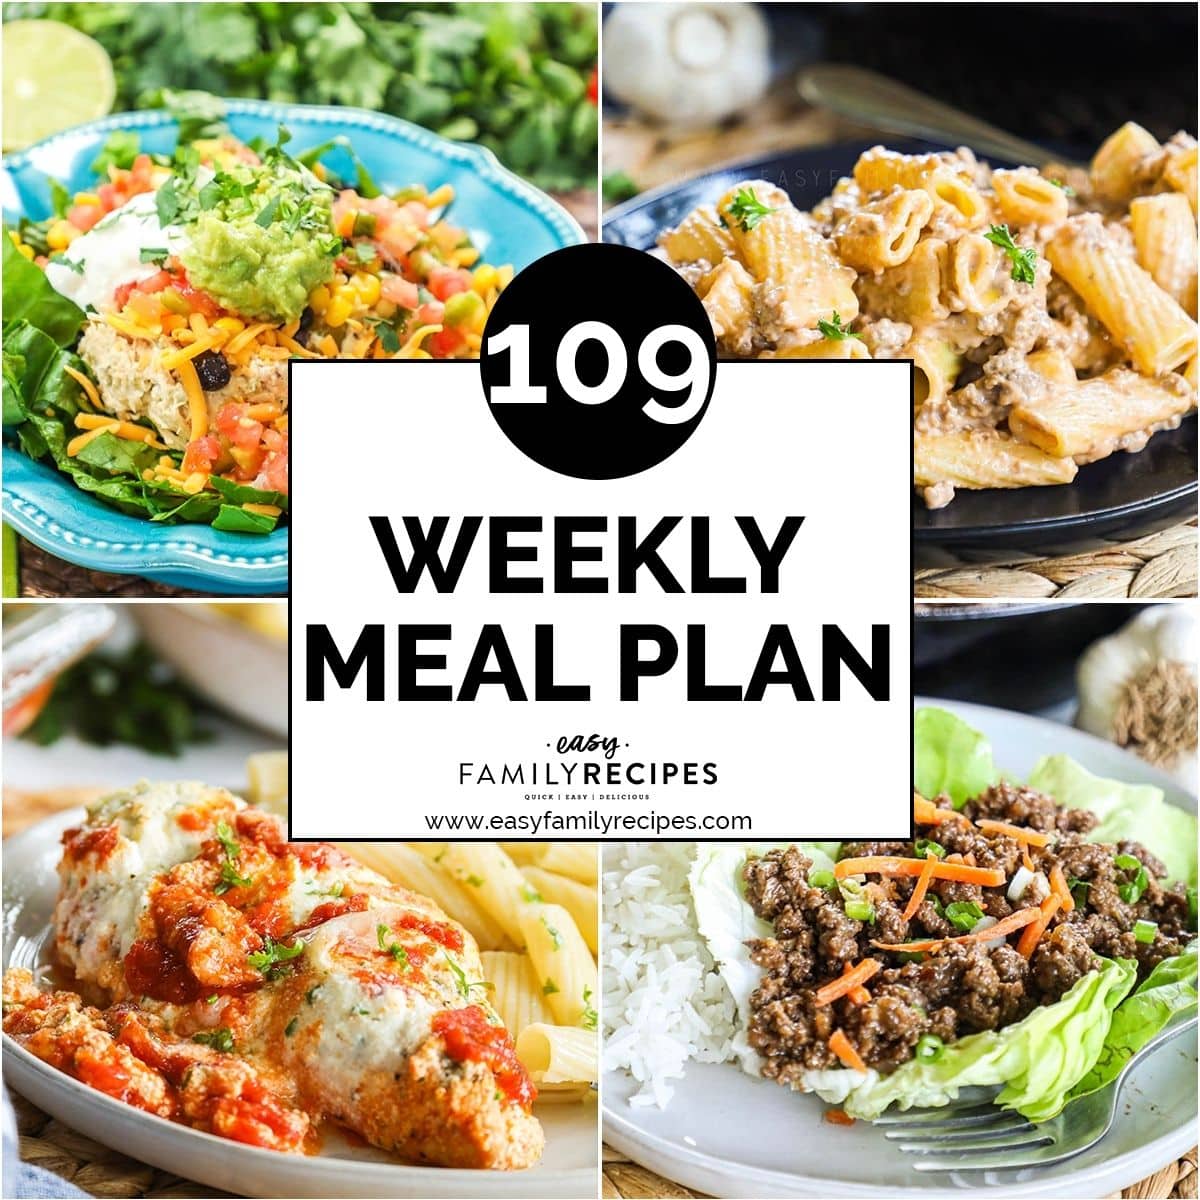 Weekly Meal Plan – 109